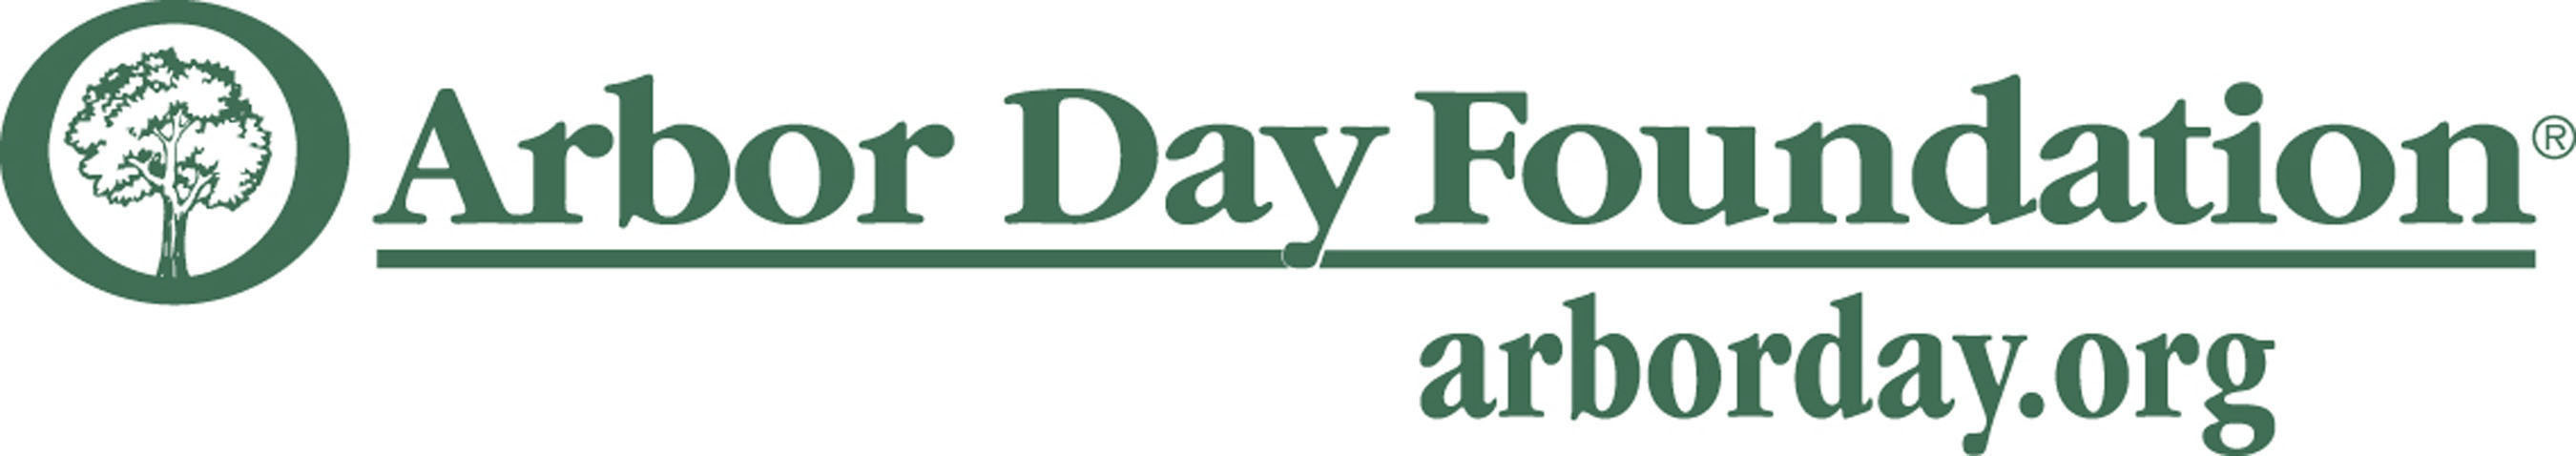 Arbor Day Foundation.